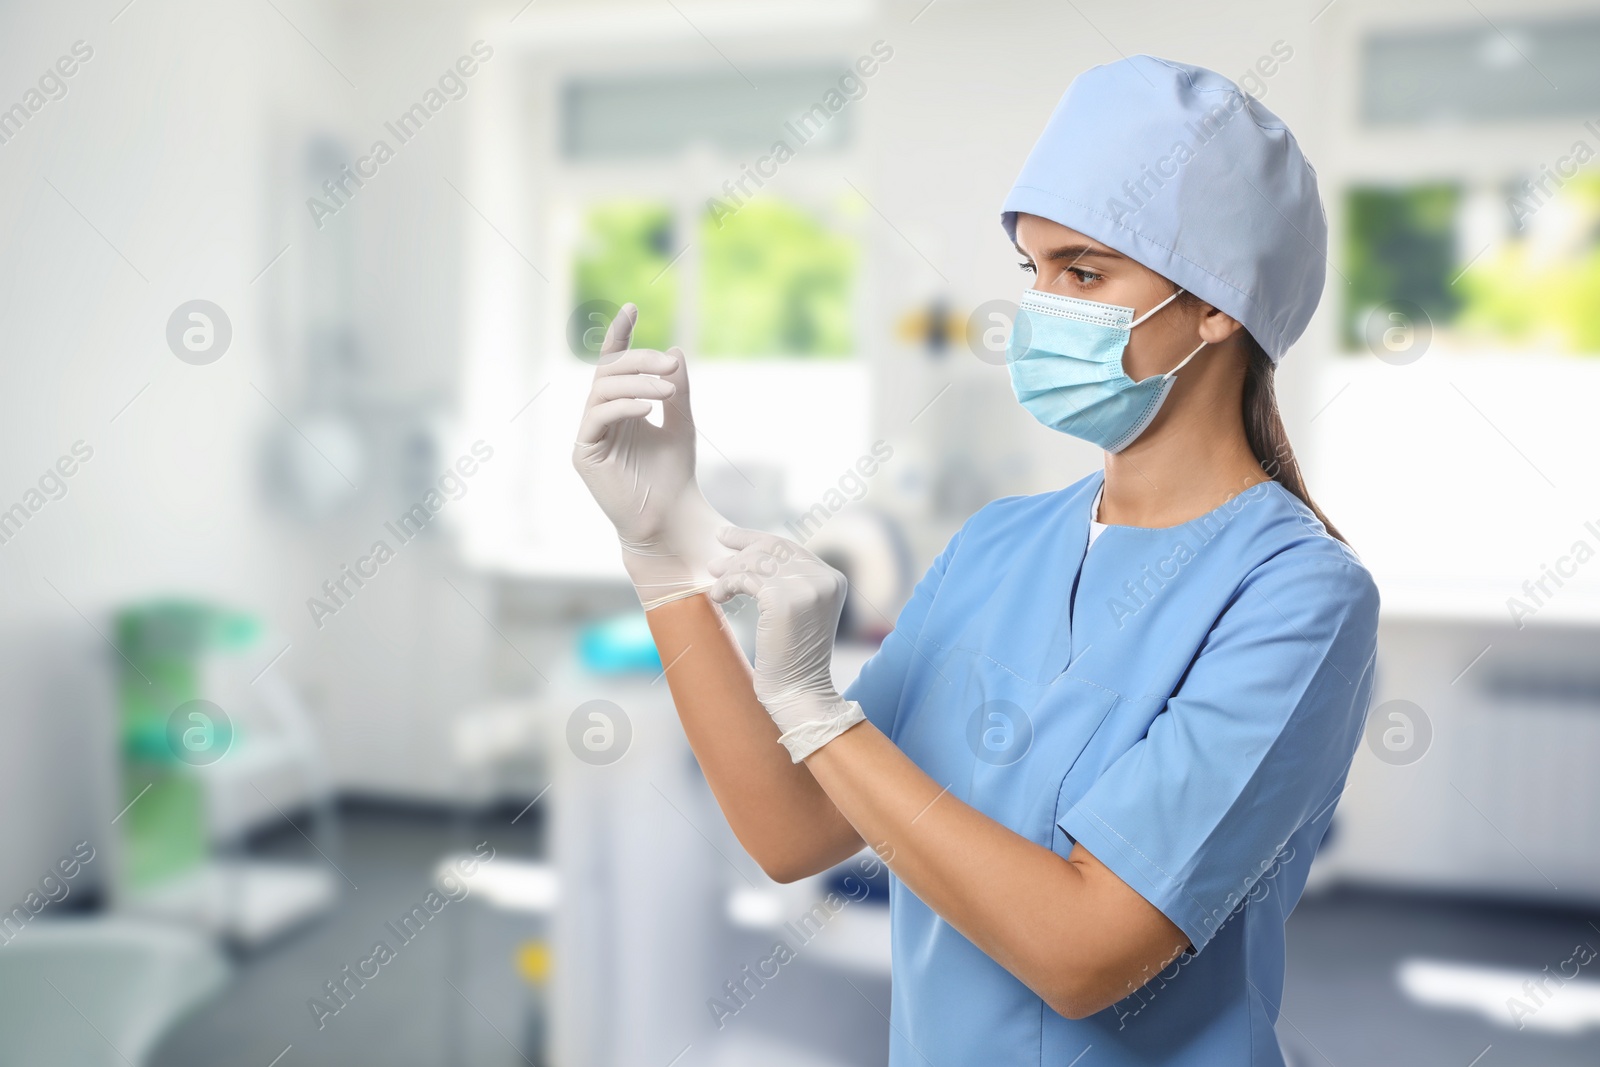 Image of Nurse in uniform putting on gloves at hospital